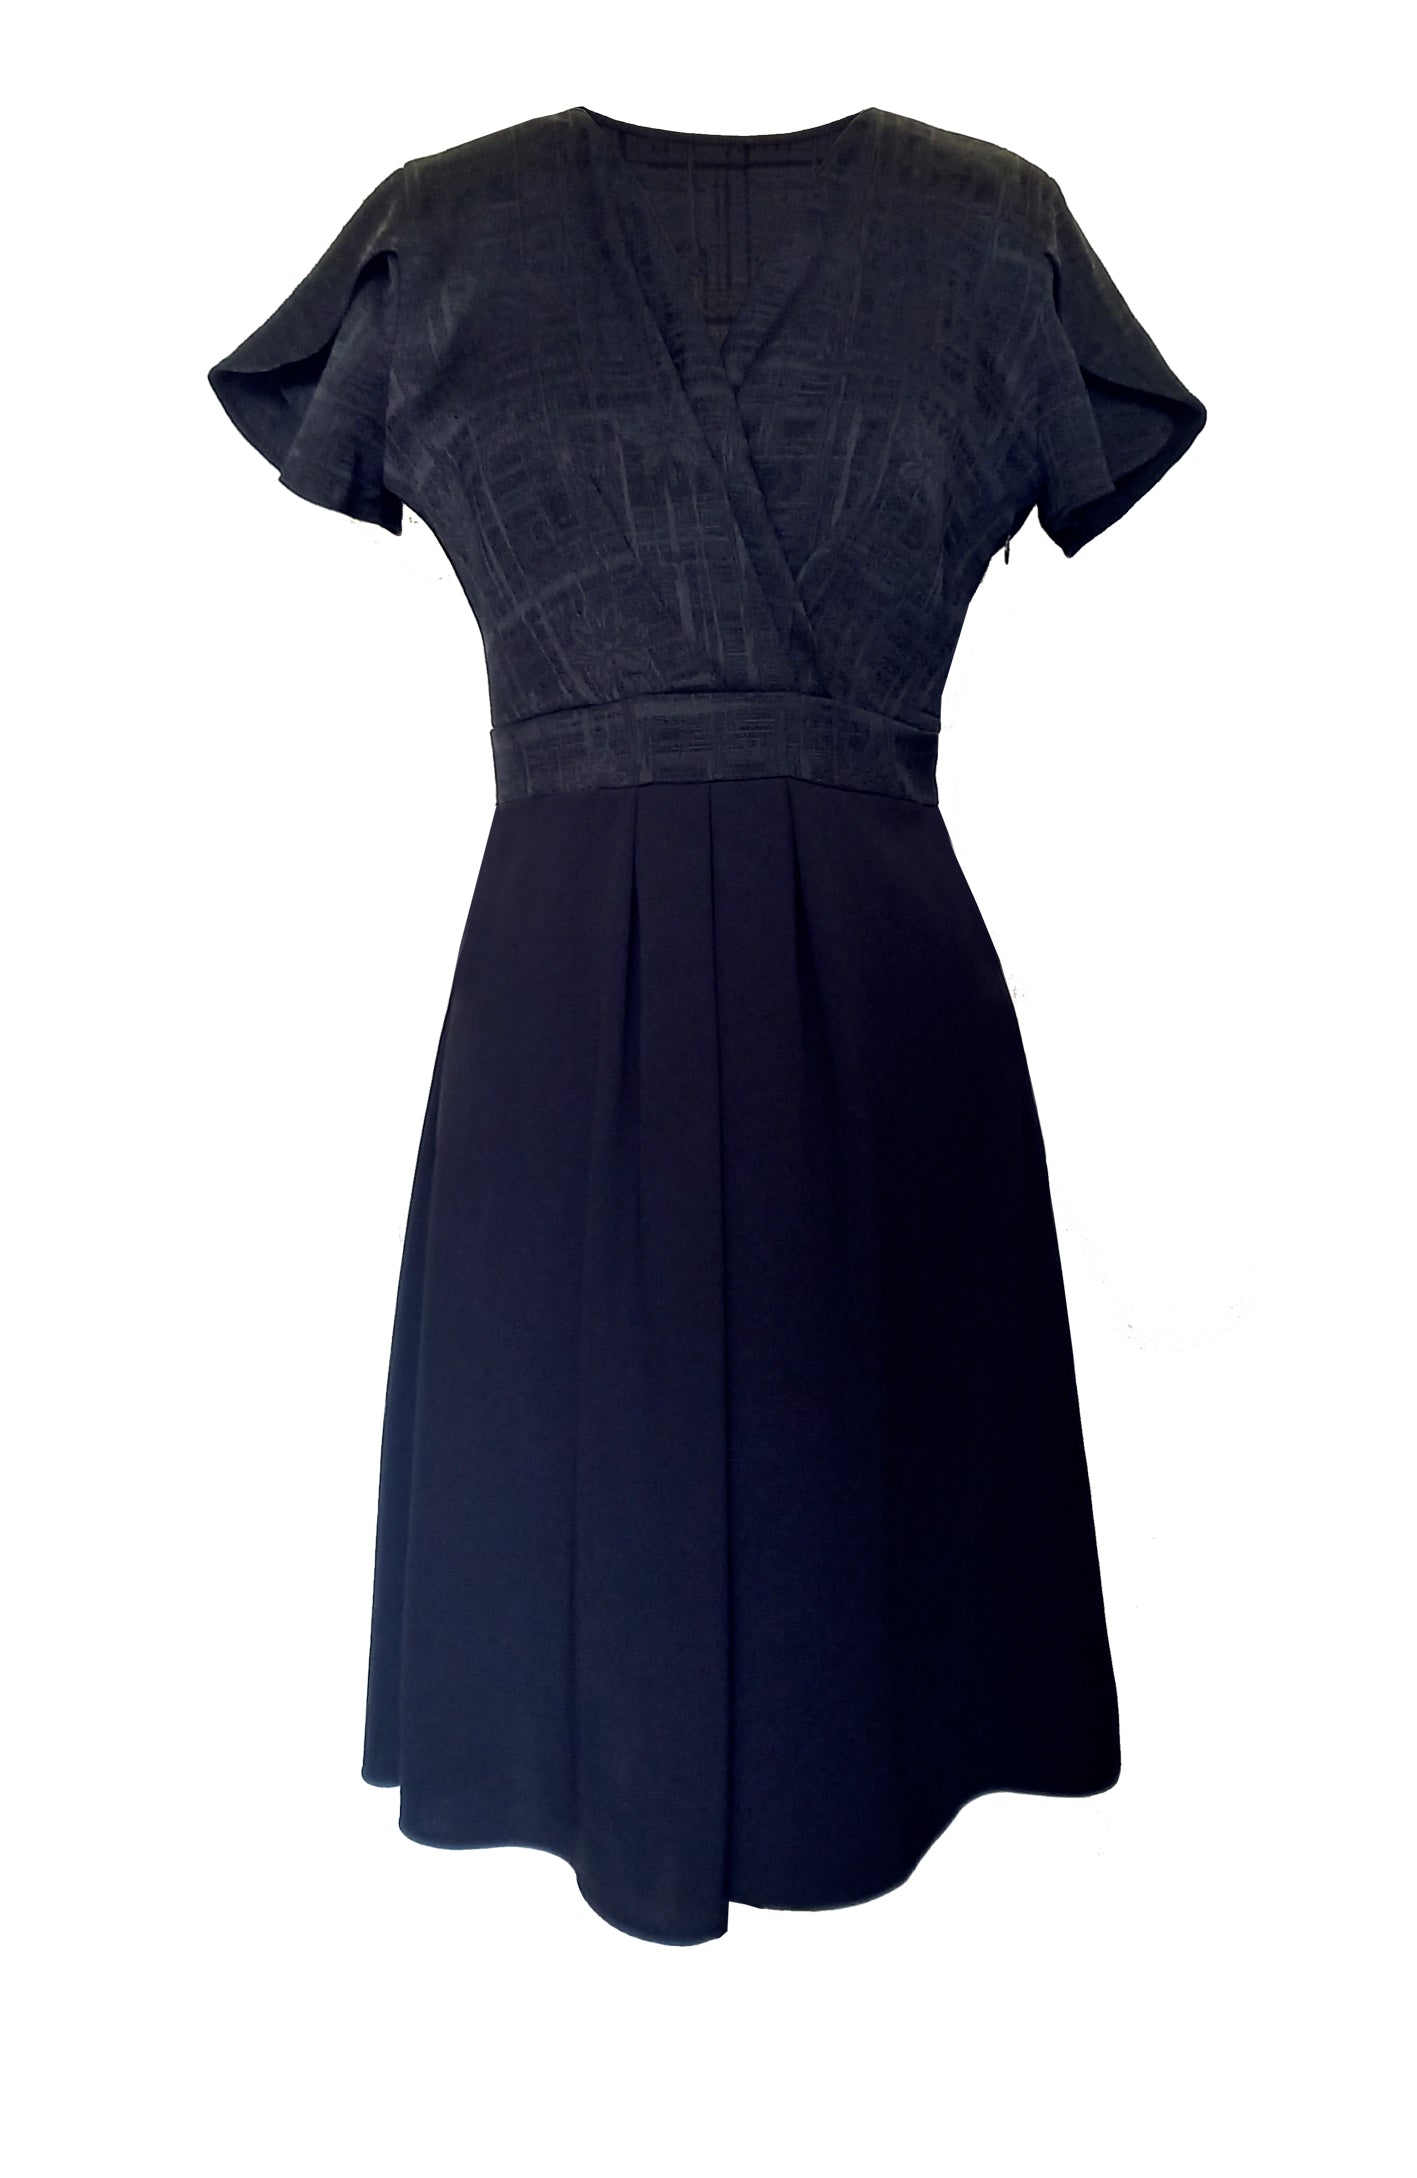 Robe MATISSE borneo - Robe féminine à petites manches, noire bi-matières certifiée Oeko-tex